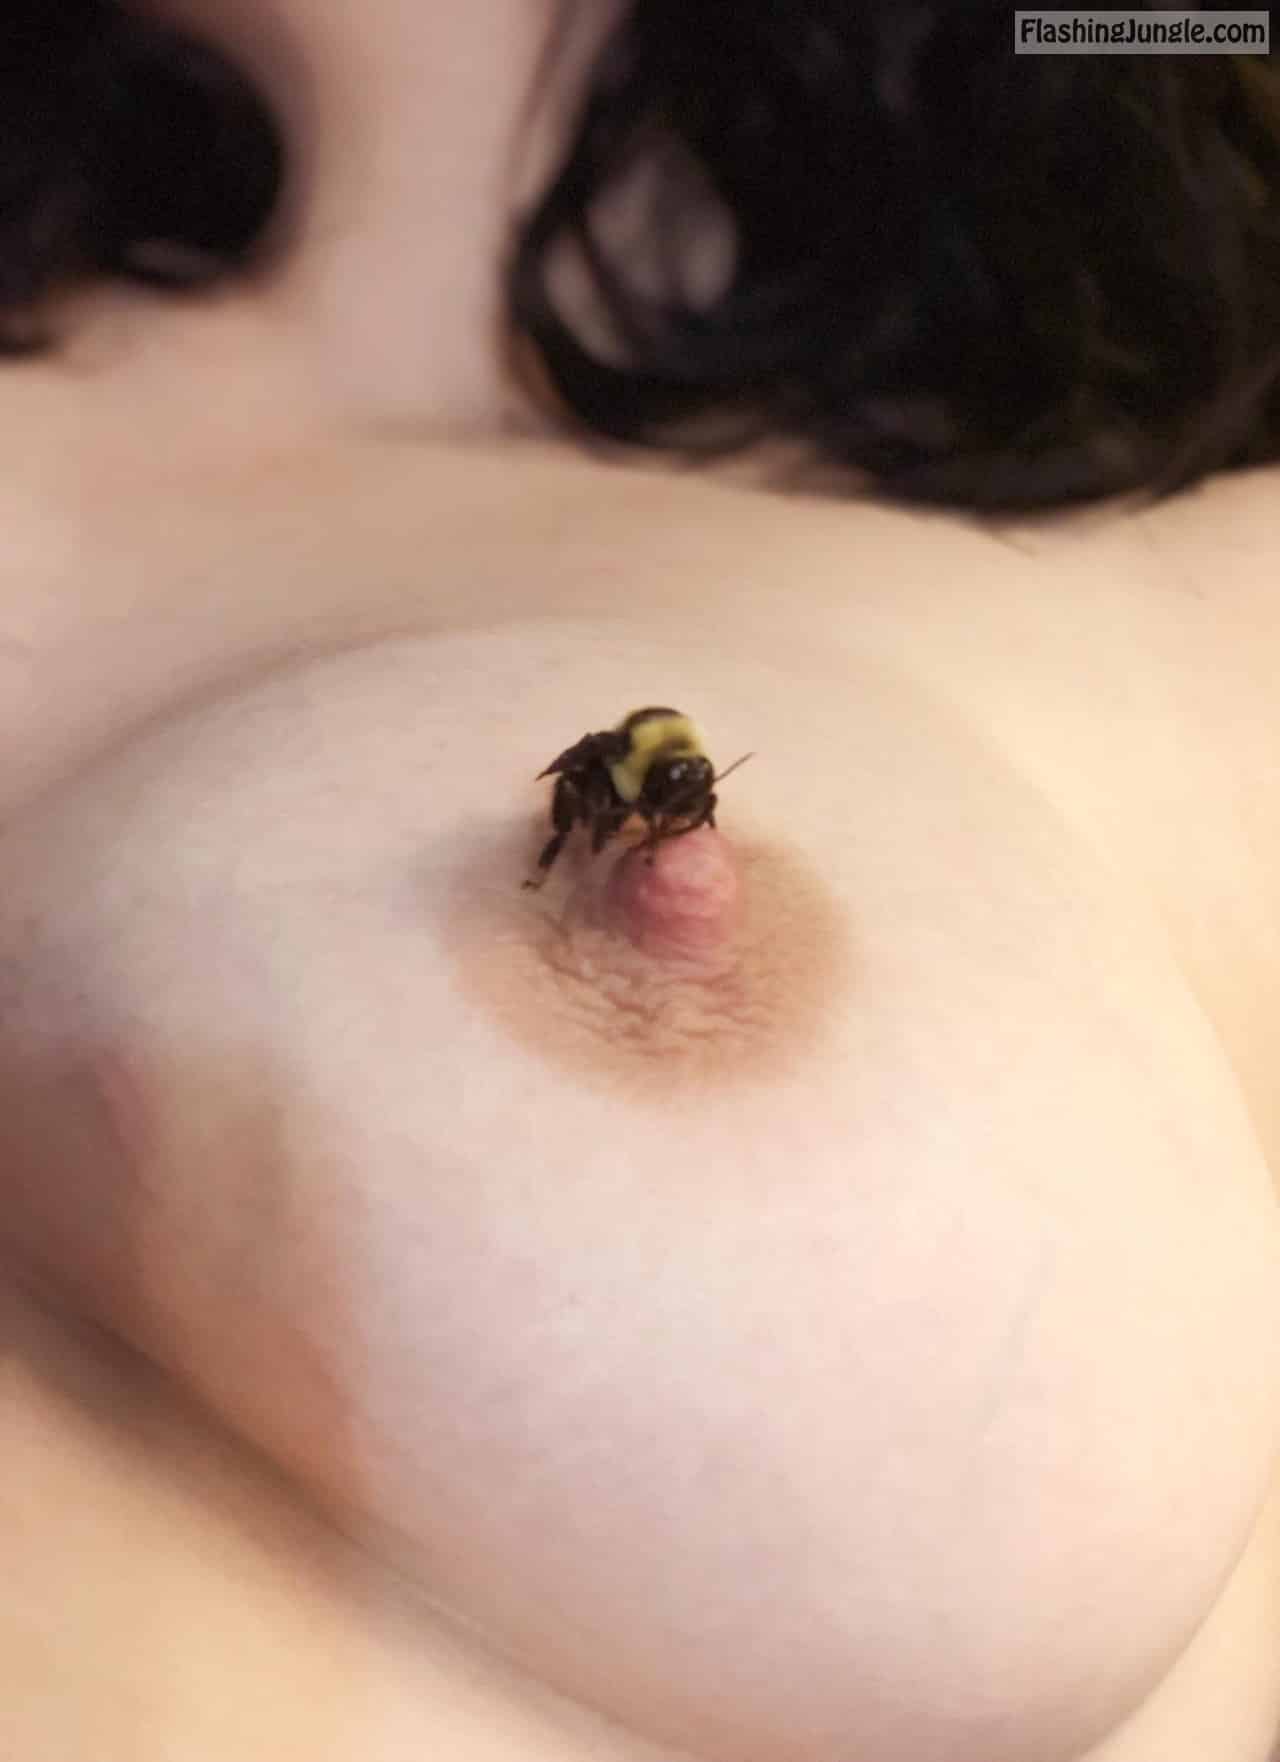 dudding nipples - Bee on nipple - Public Flashing Pics